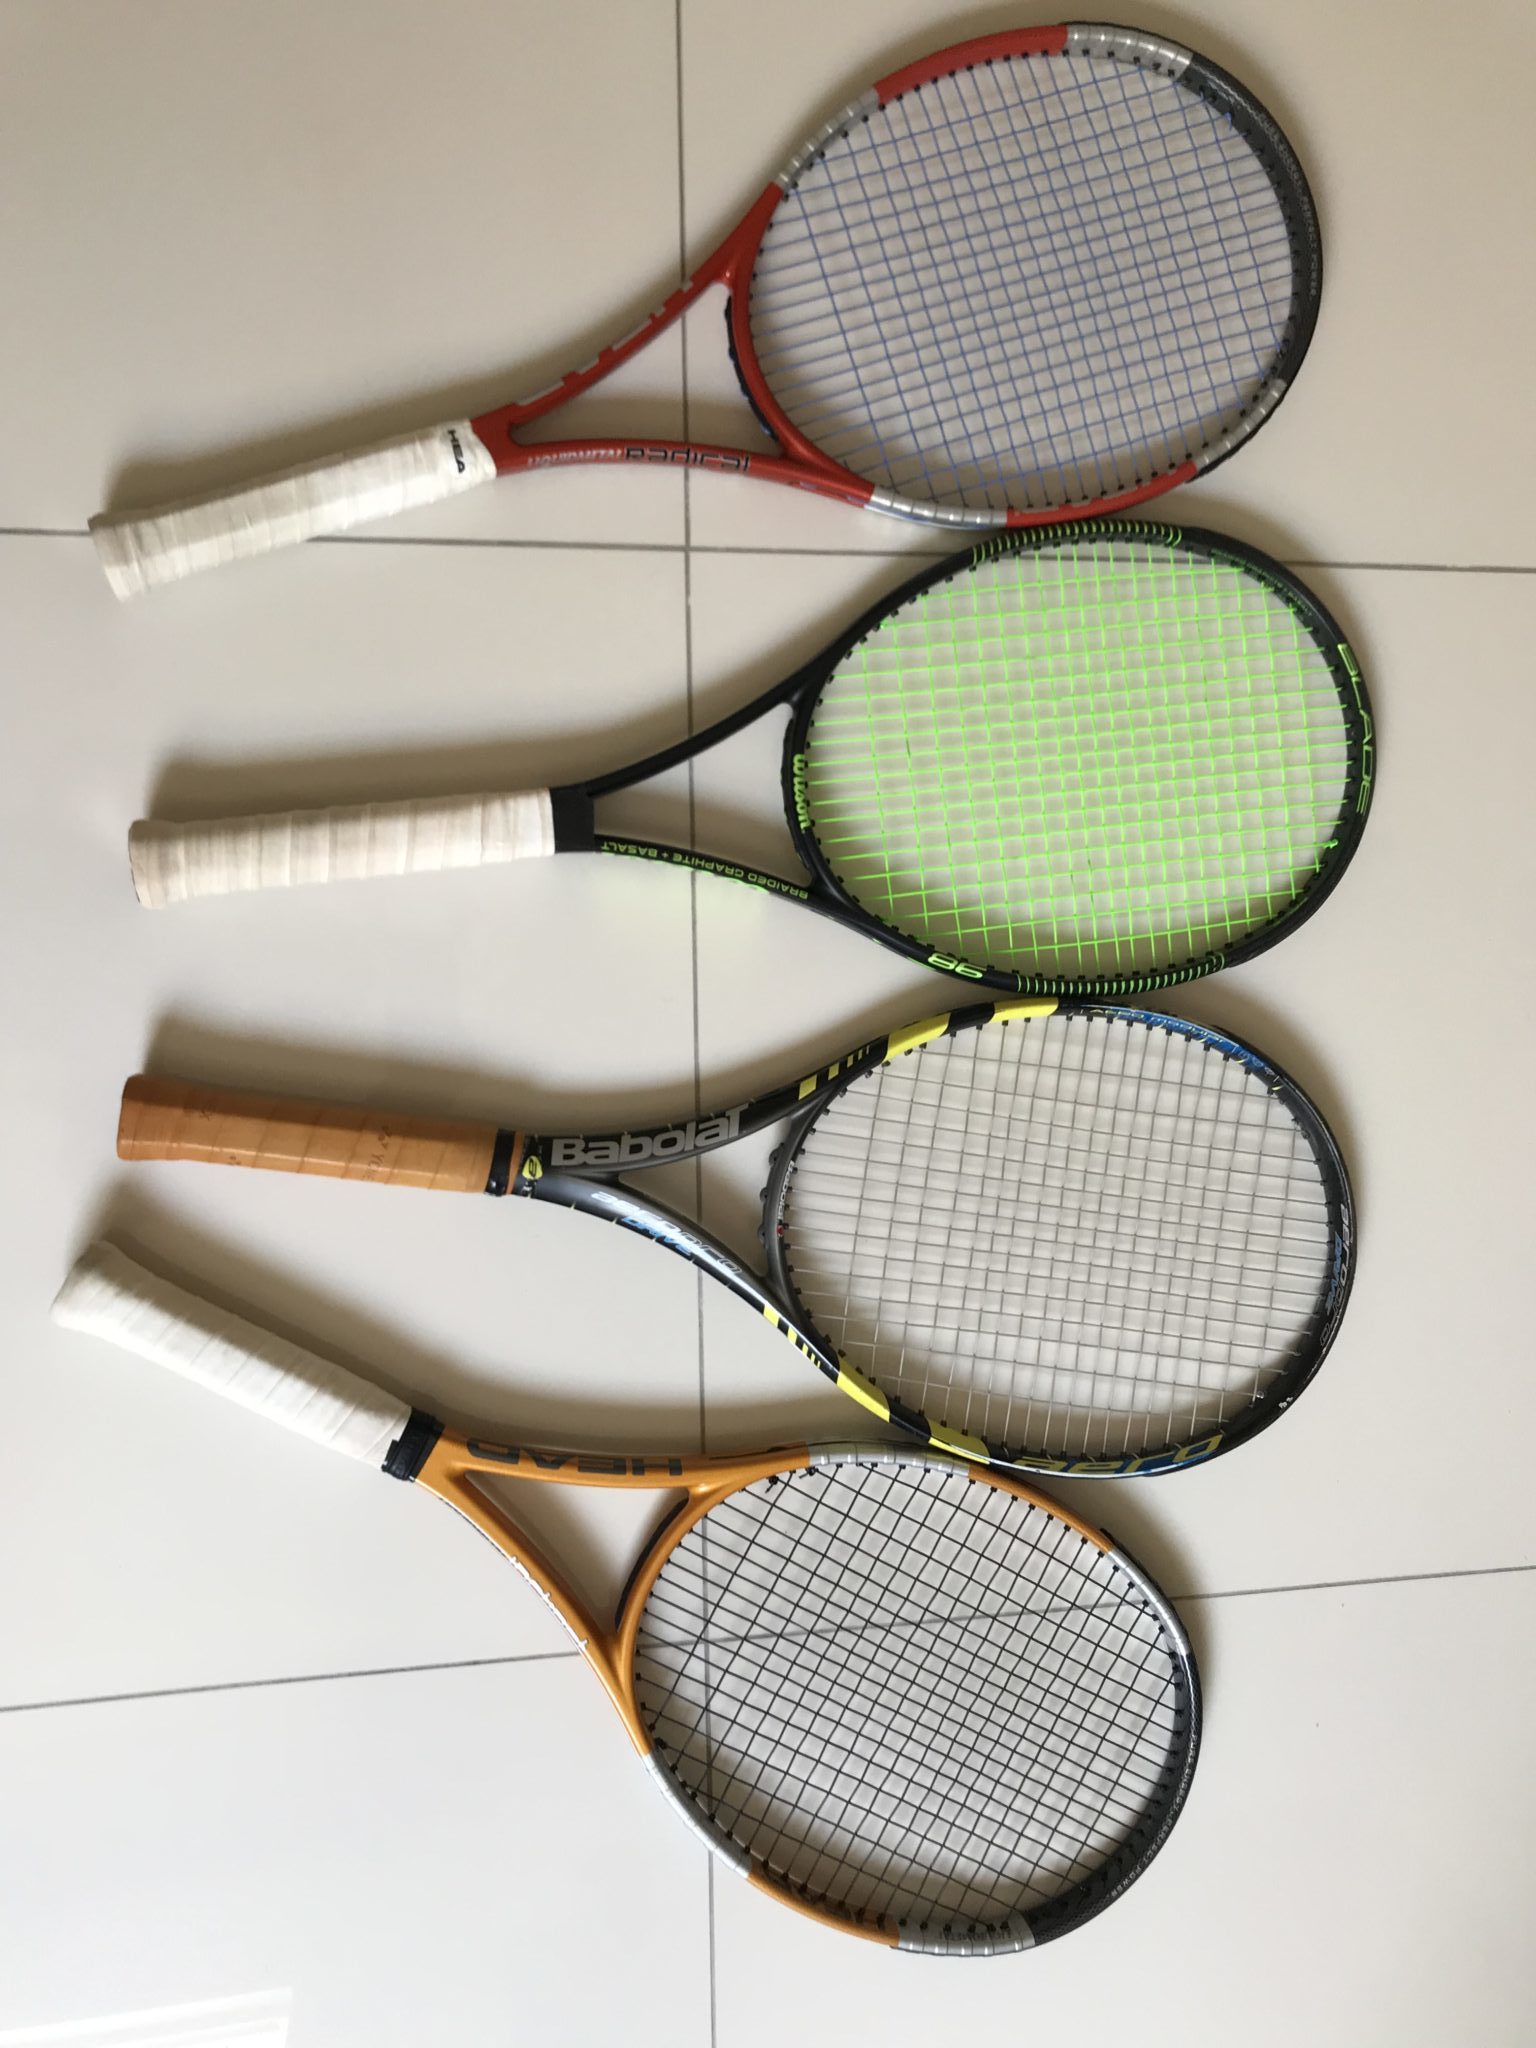 G4 UNSTRUNG Yonex Tennis Racquet VCORE Tour G Hard-Hitting w/Max Control/Spin 